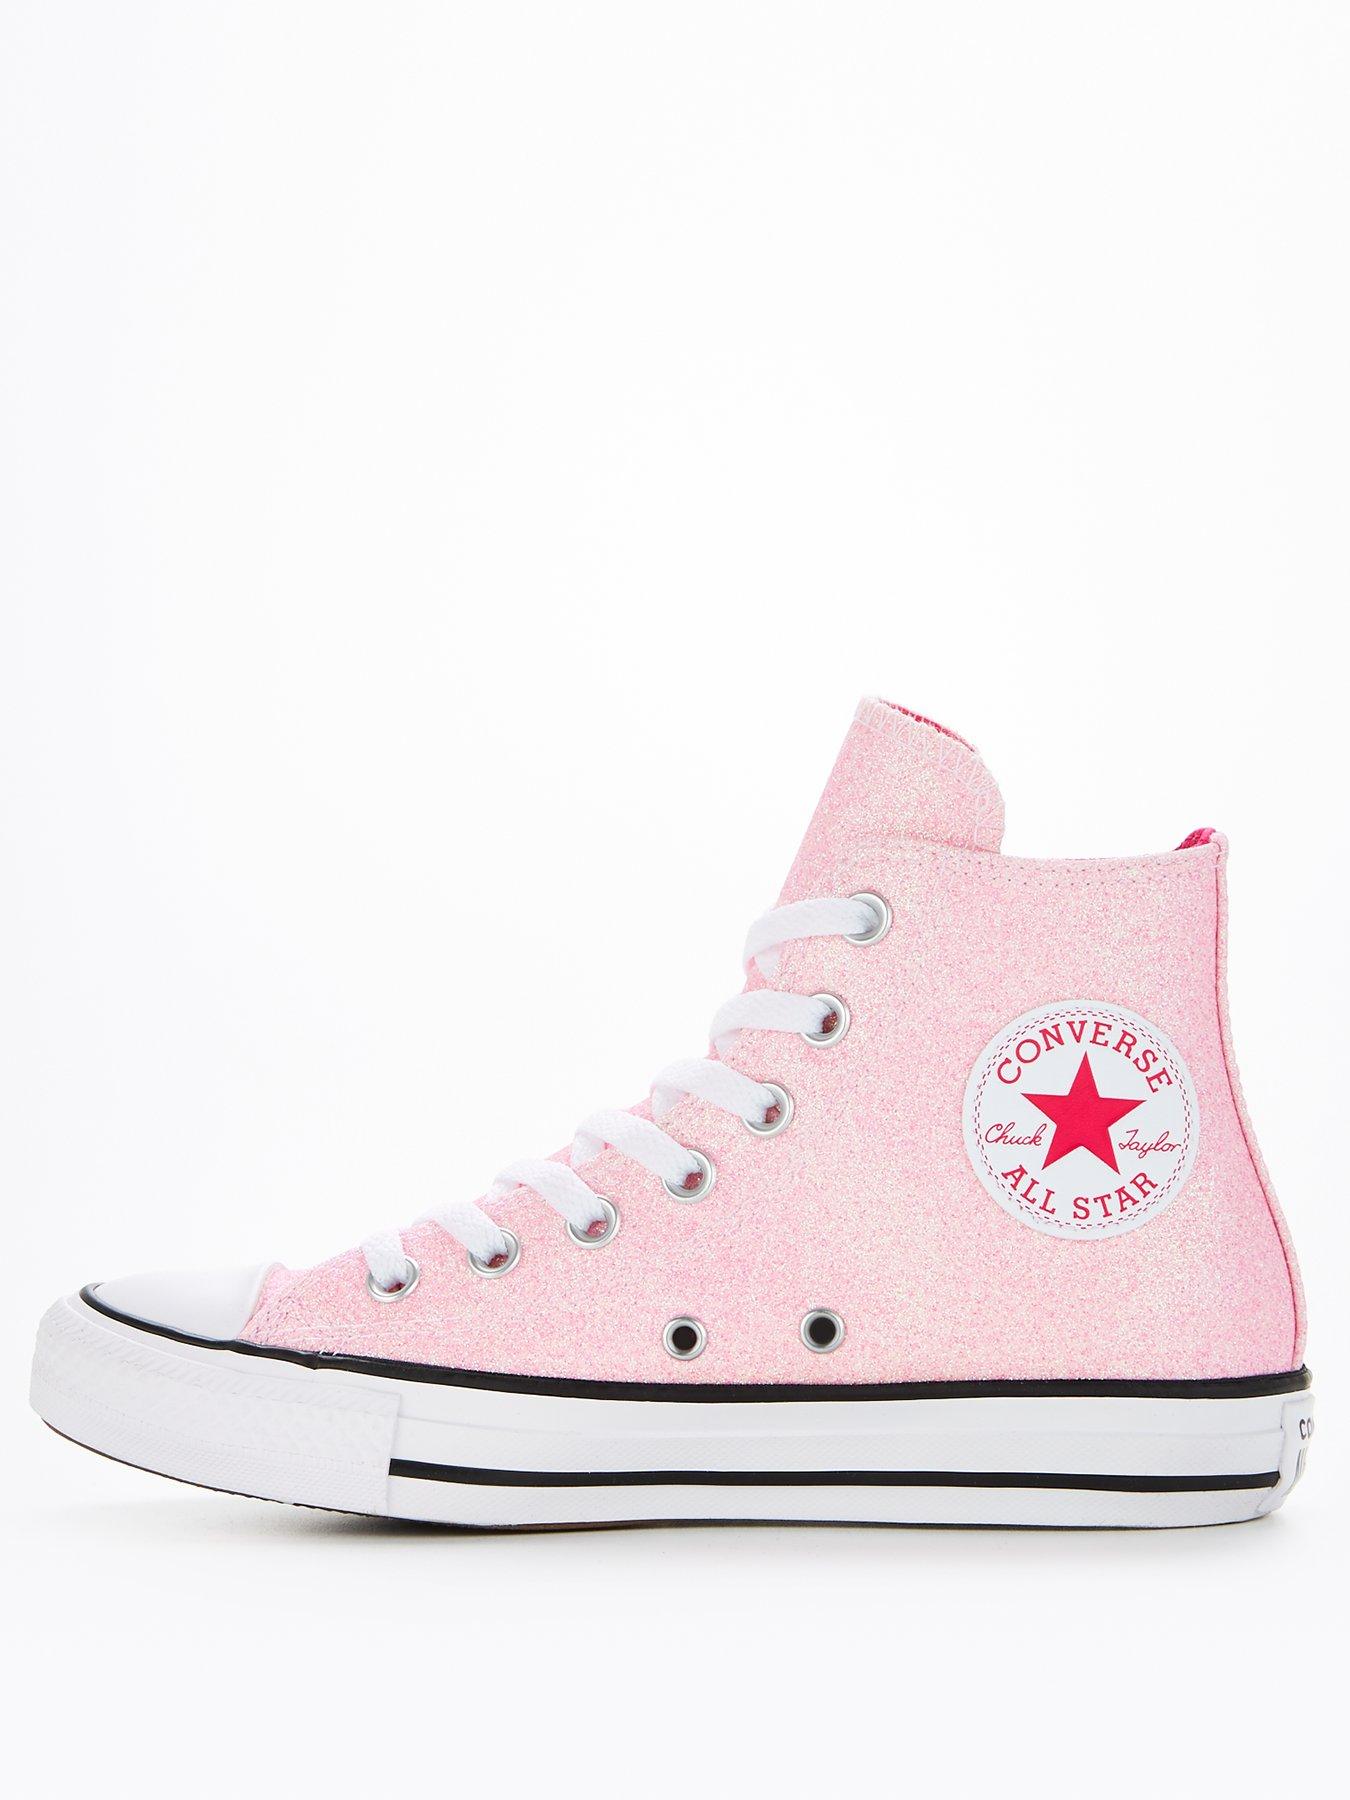 pastel pink converse high tops